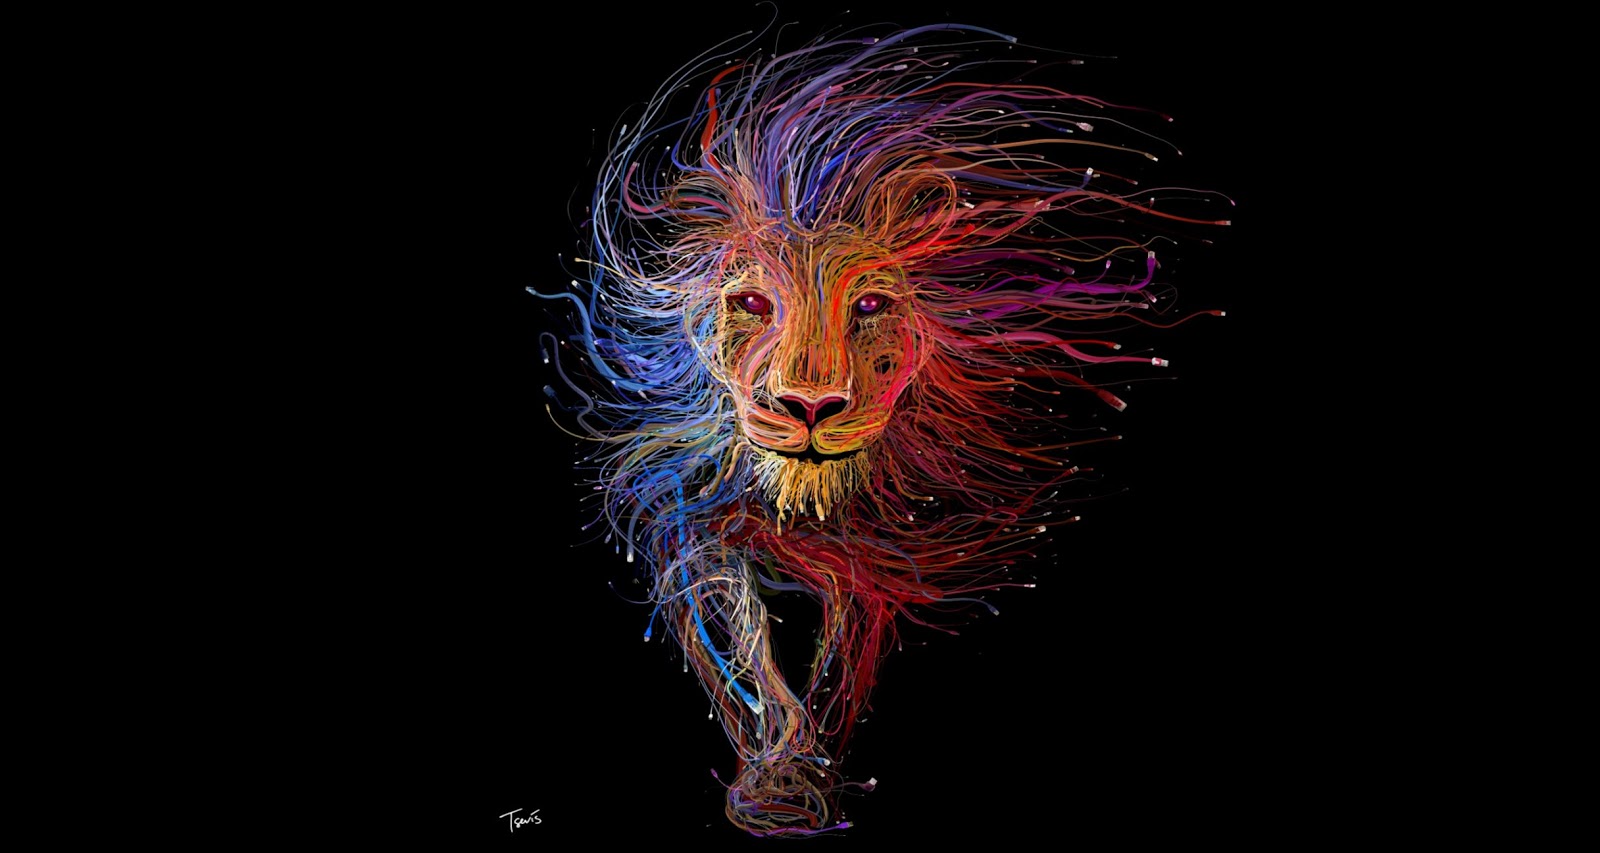 Lion Wires Art 720p HD 4k Wallpaper Image Background Wallpaper HD